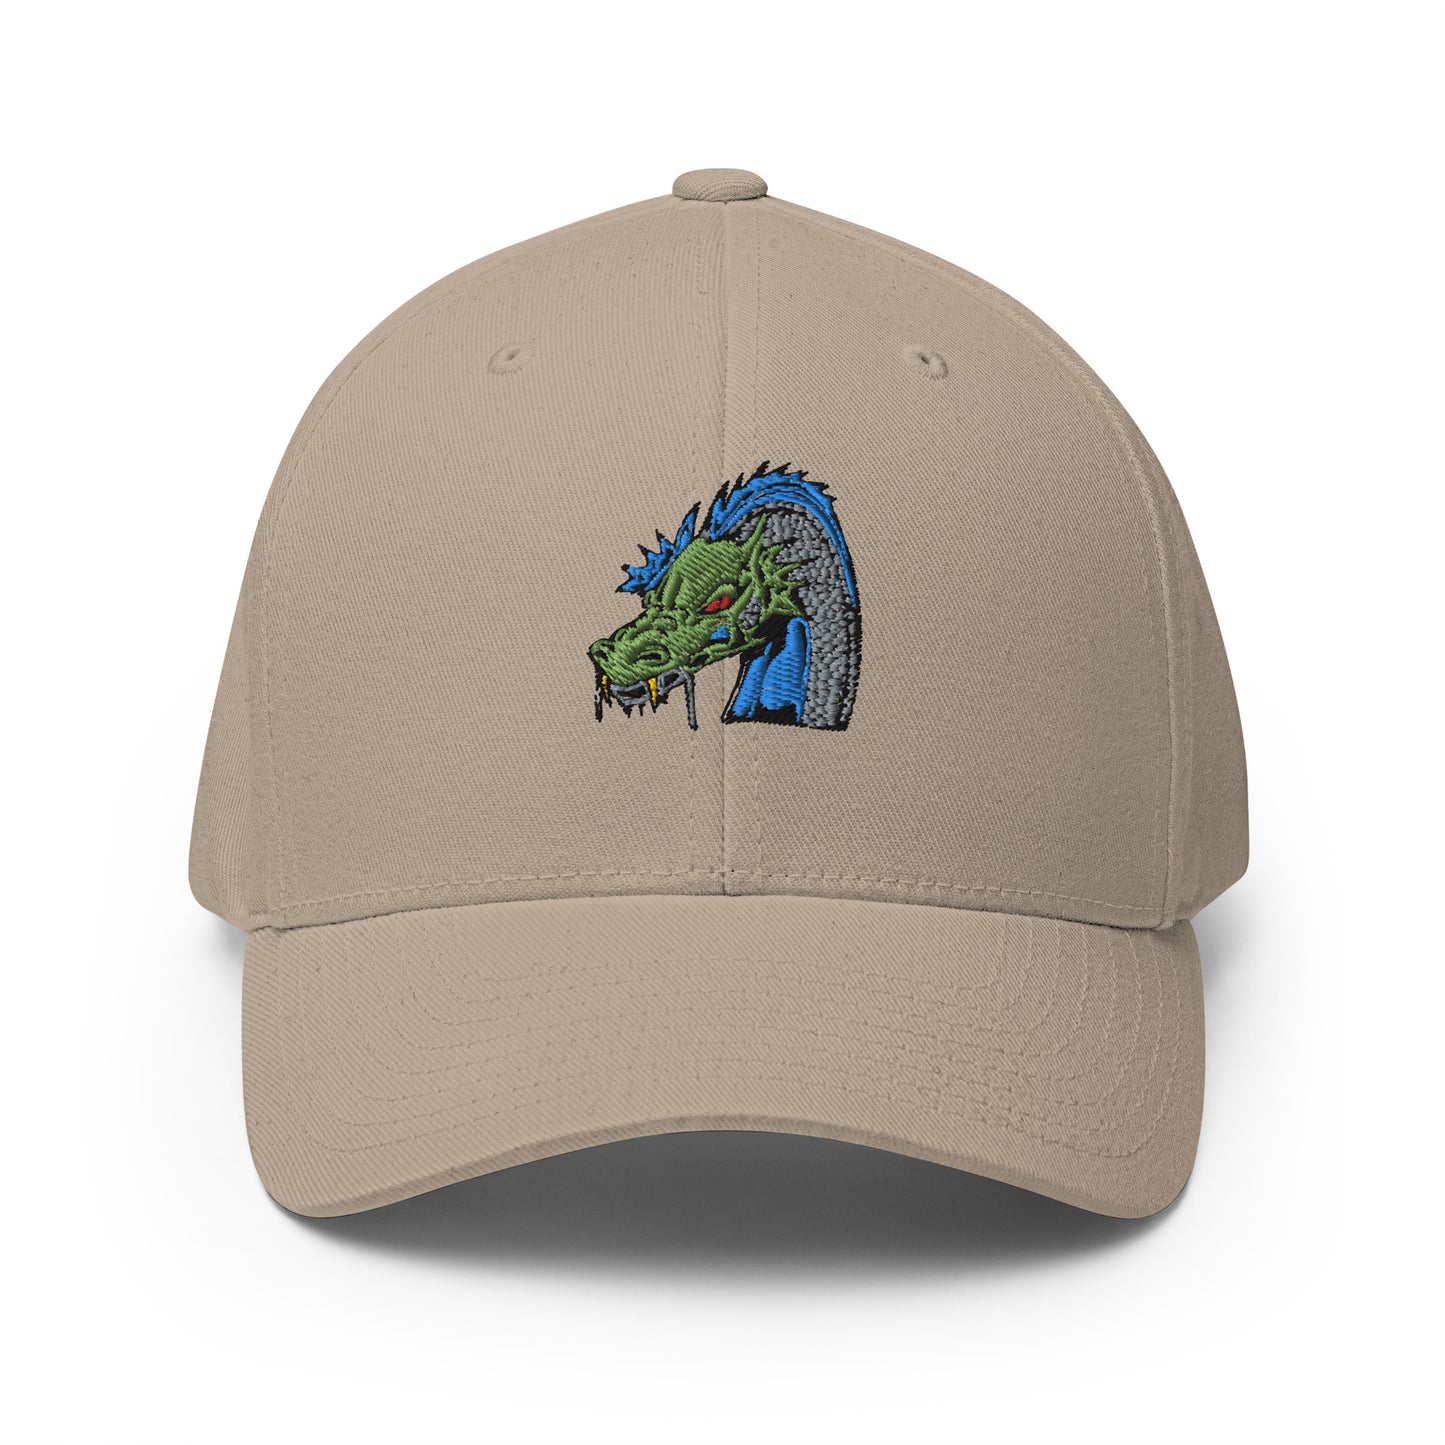 Baseball Cap with Green Dragon Symbol